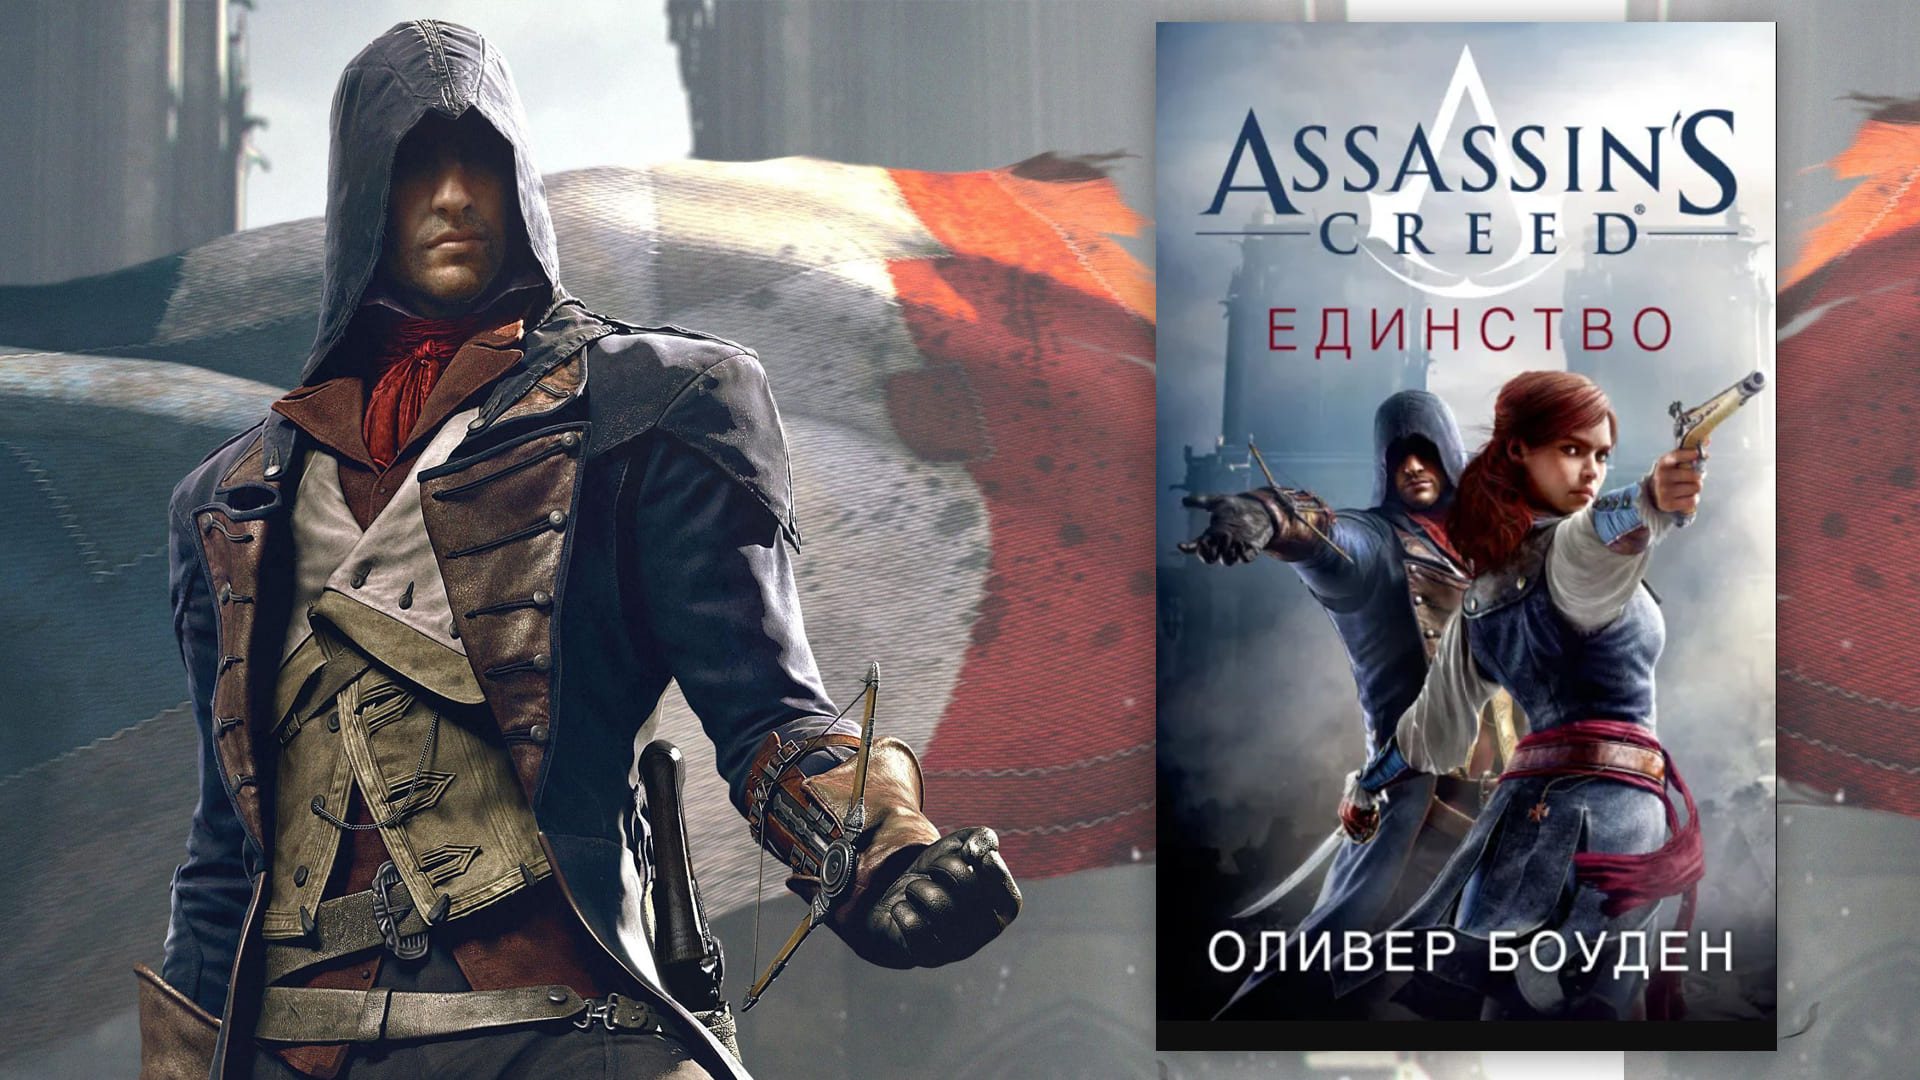 Обложка книги Assassin’s Creed «Единство»